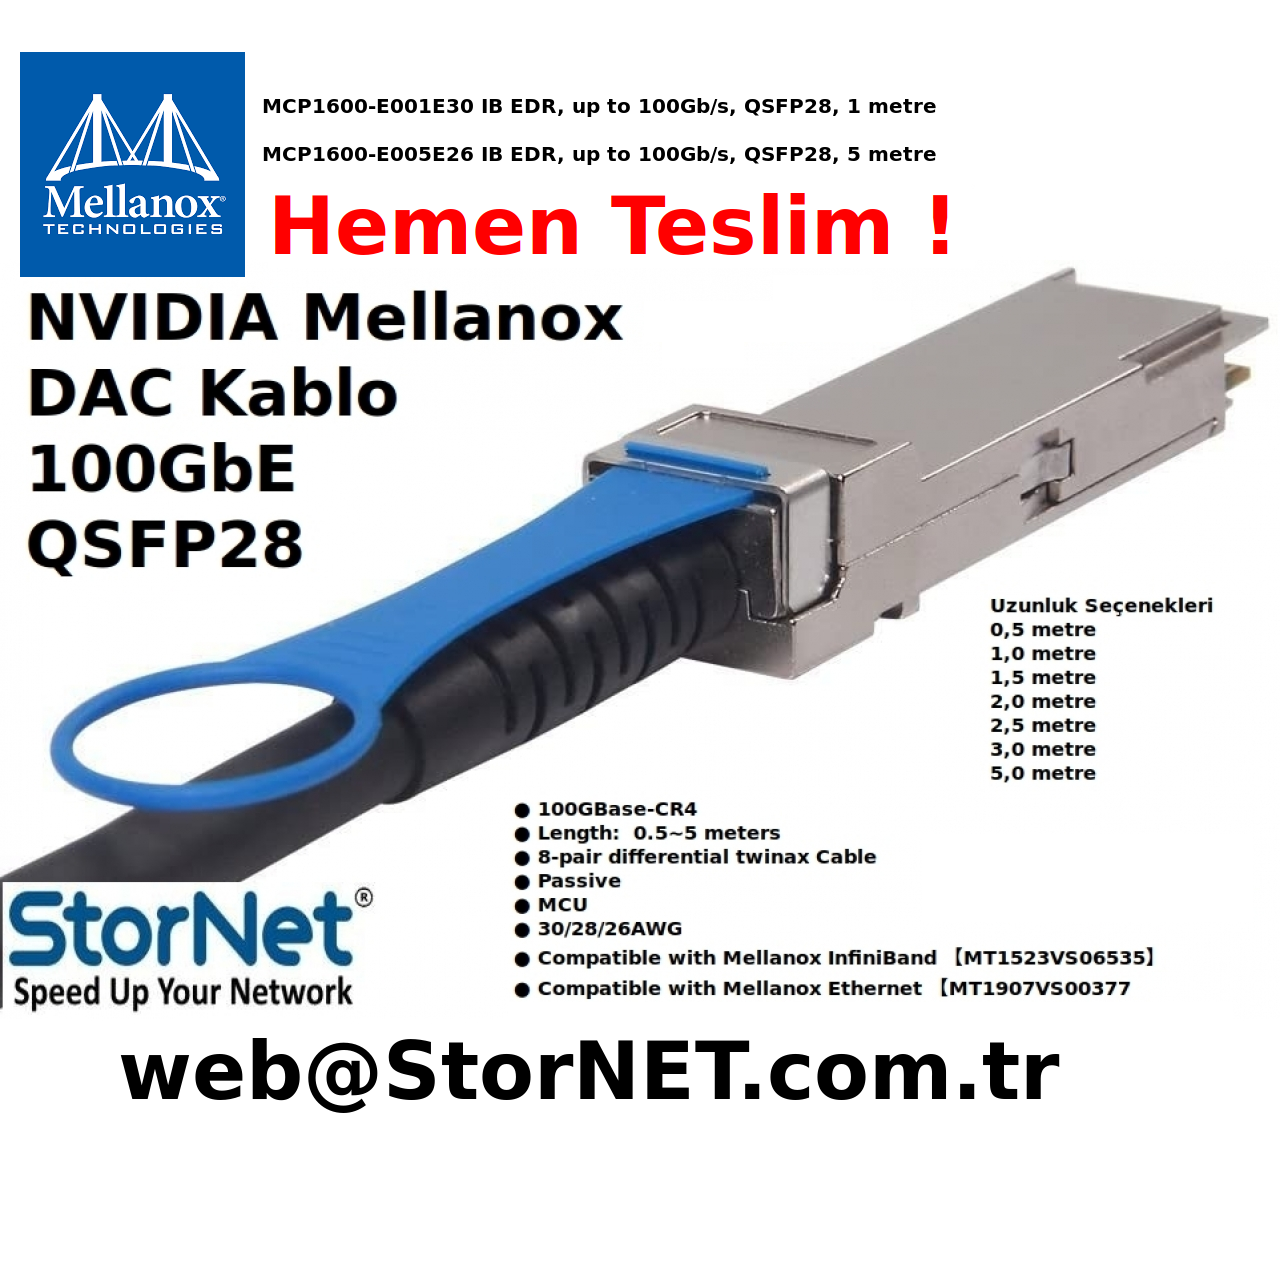 NVIDIA mellanox MCP1600-E001E30 DAC Cable IB EDR up to 100Gb/s QSFP28 1 metre